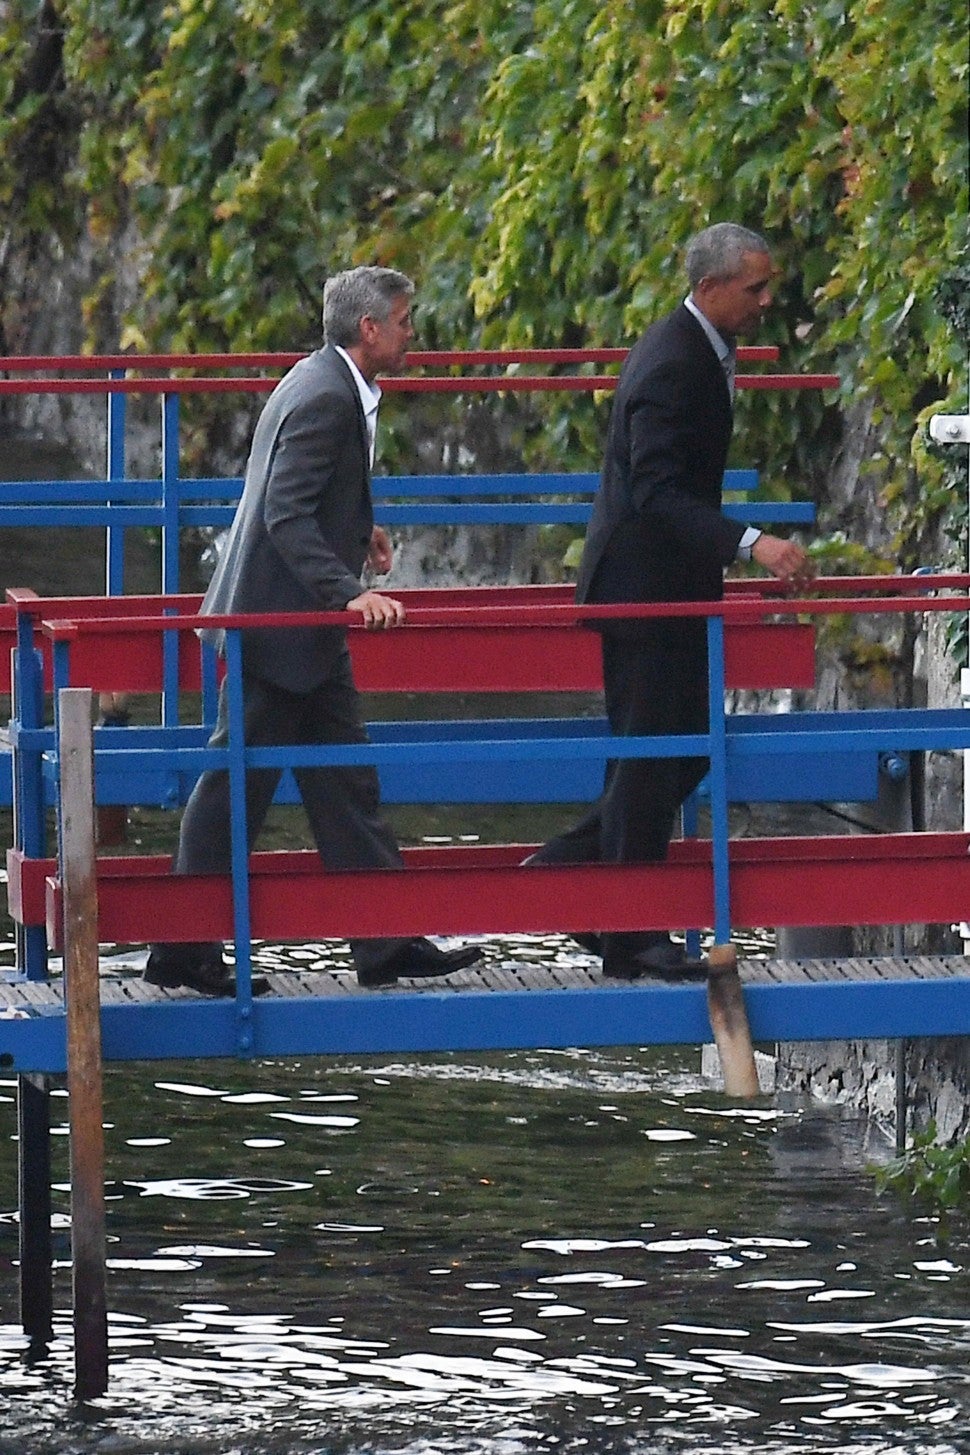 George Clooney and Barack Obama